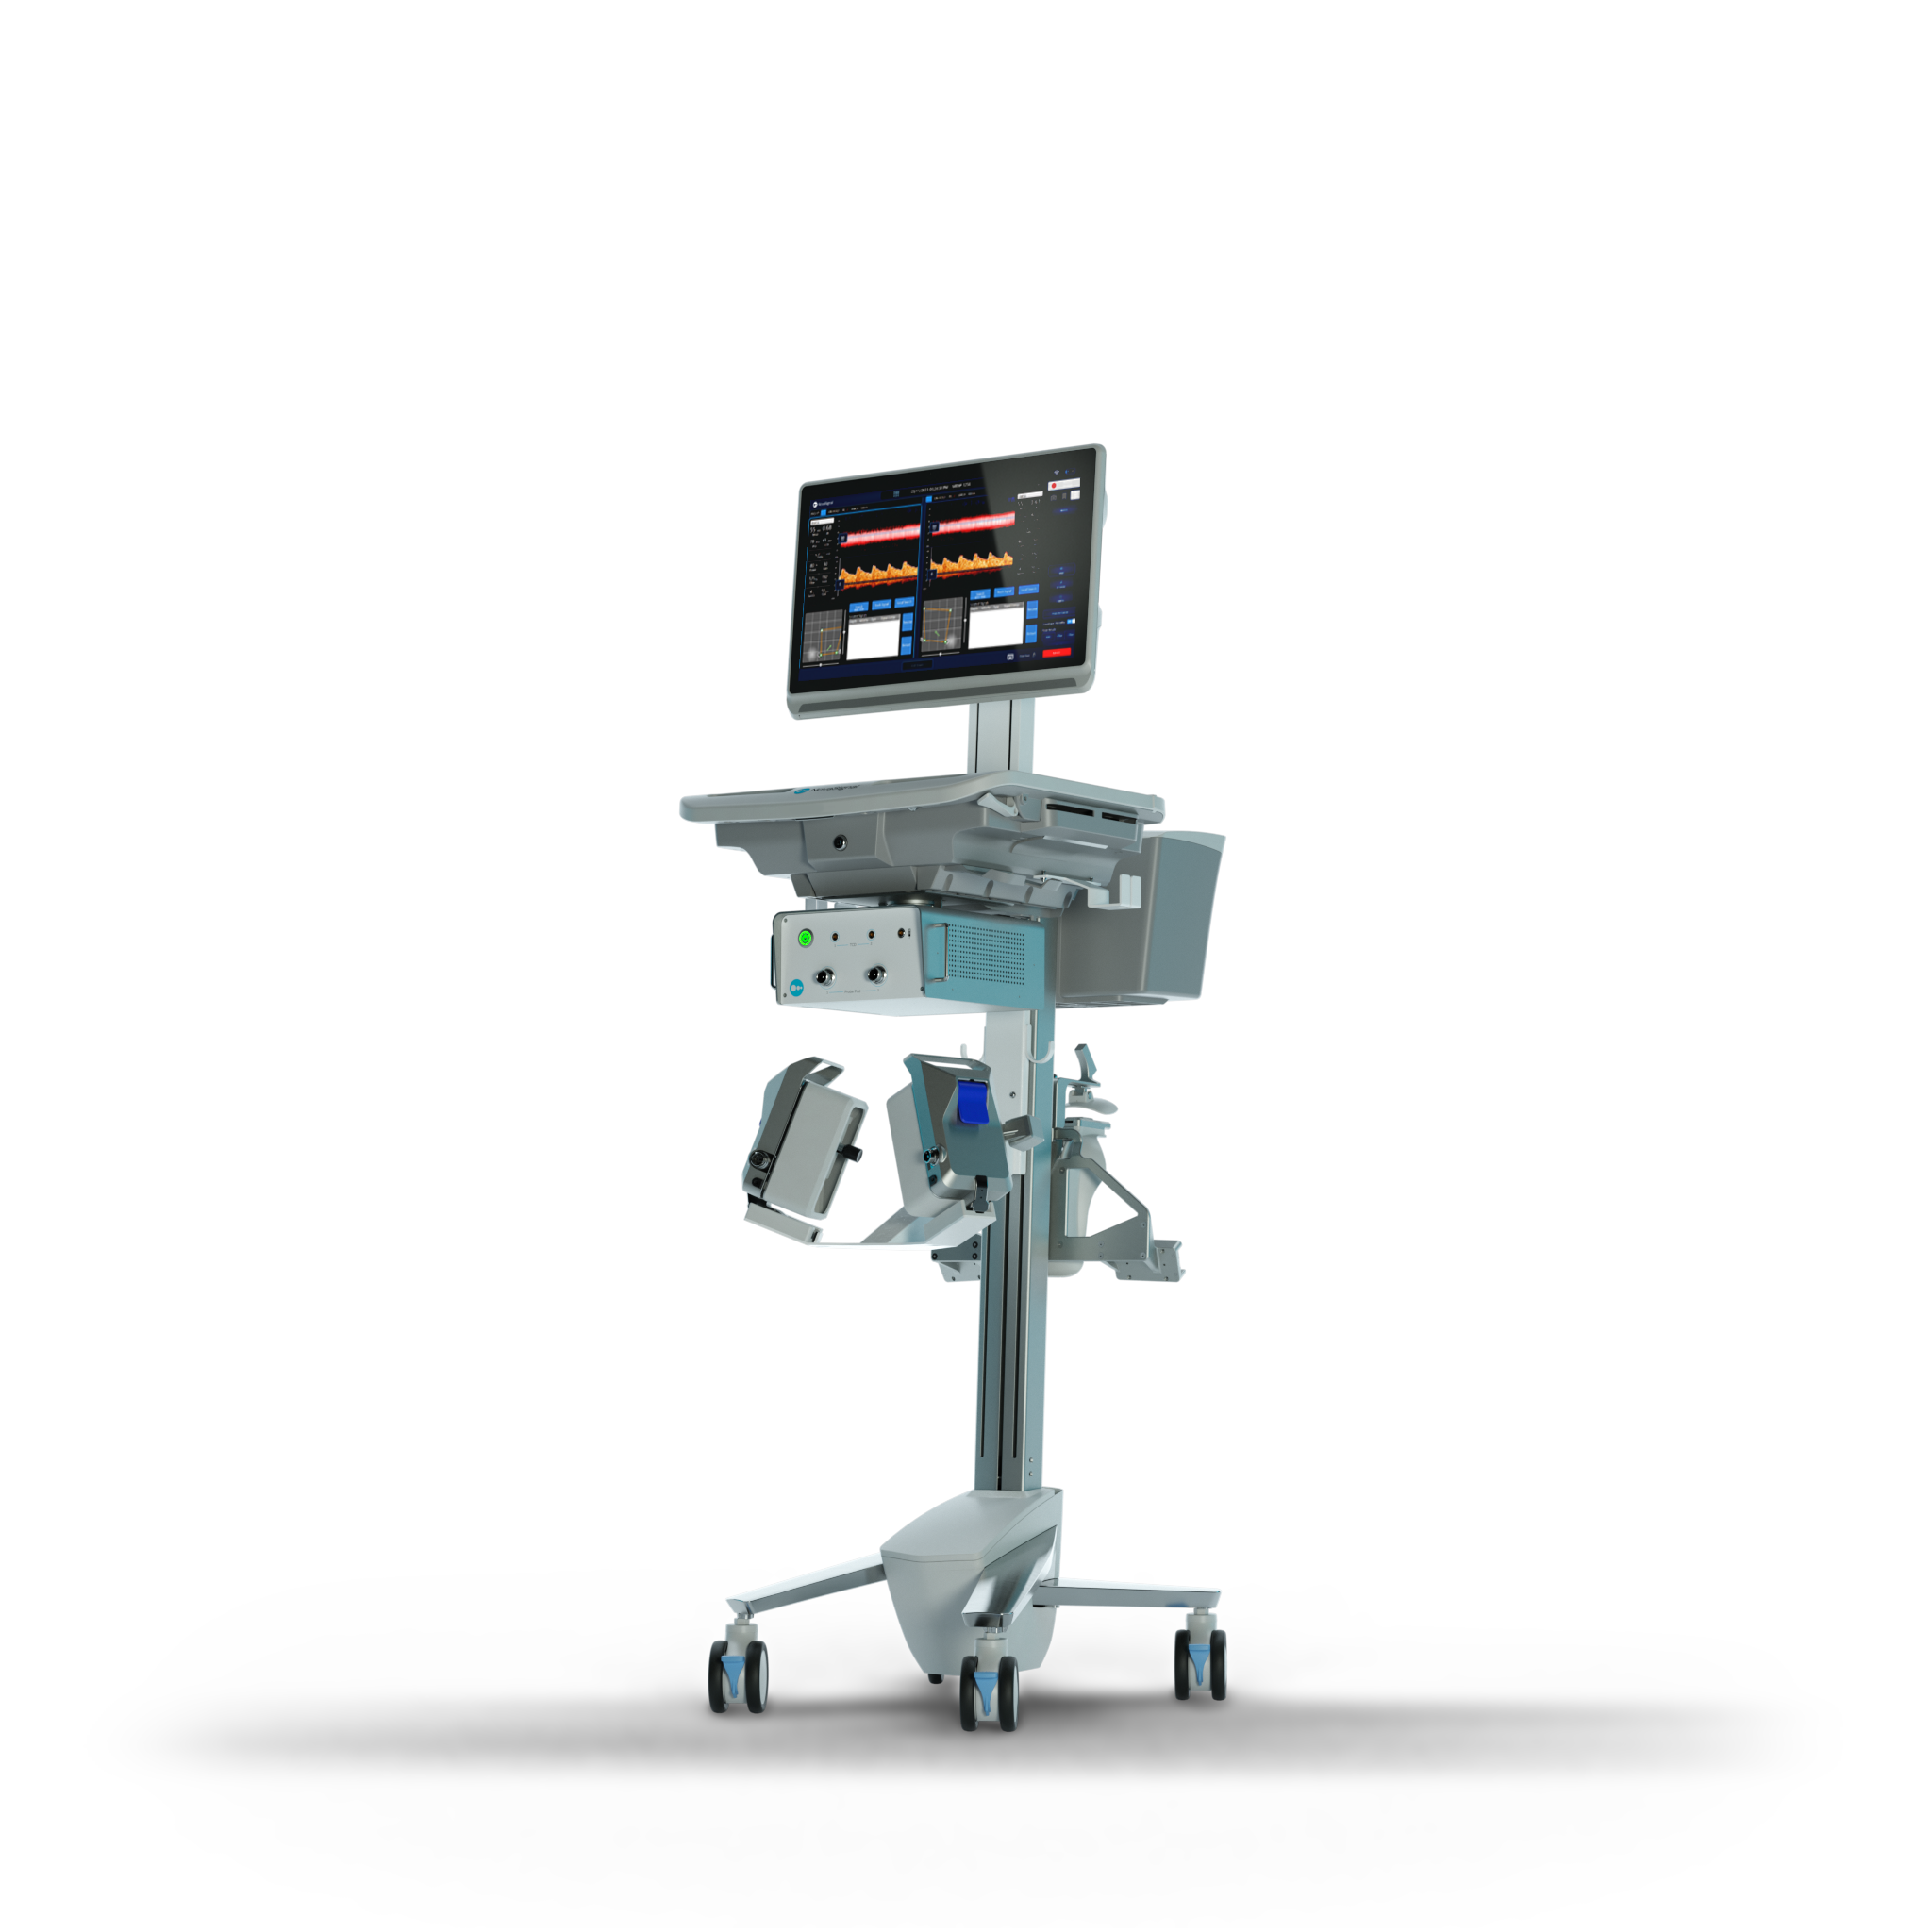 NovaGuide 2 Intelligent Ultrasound Full Cart